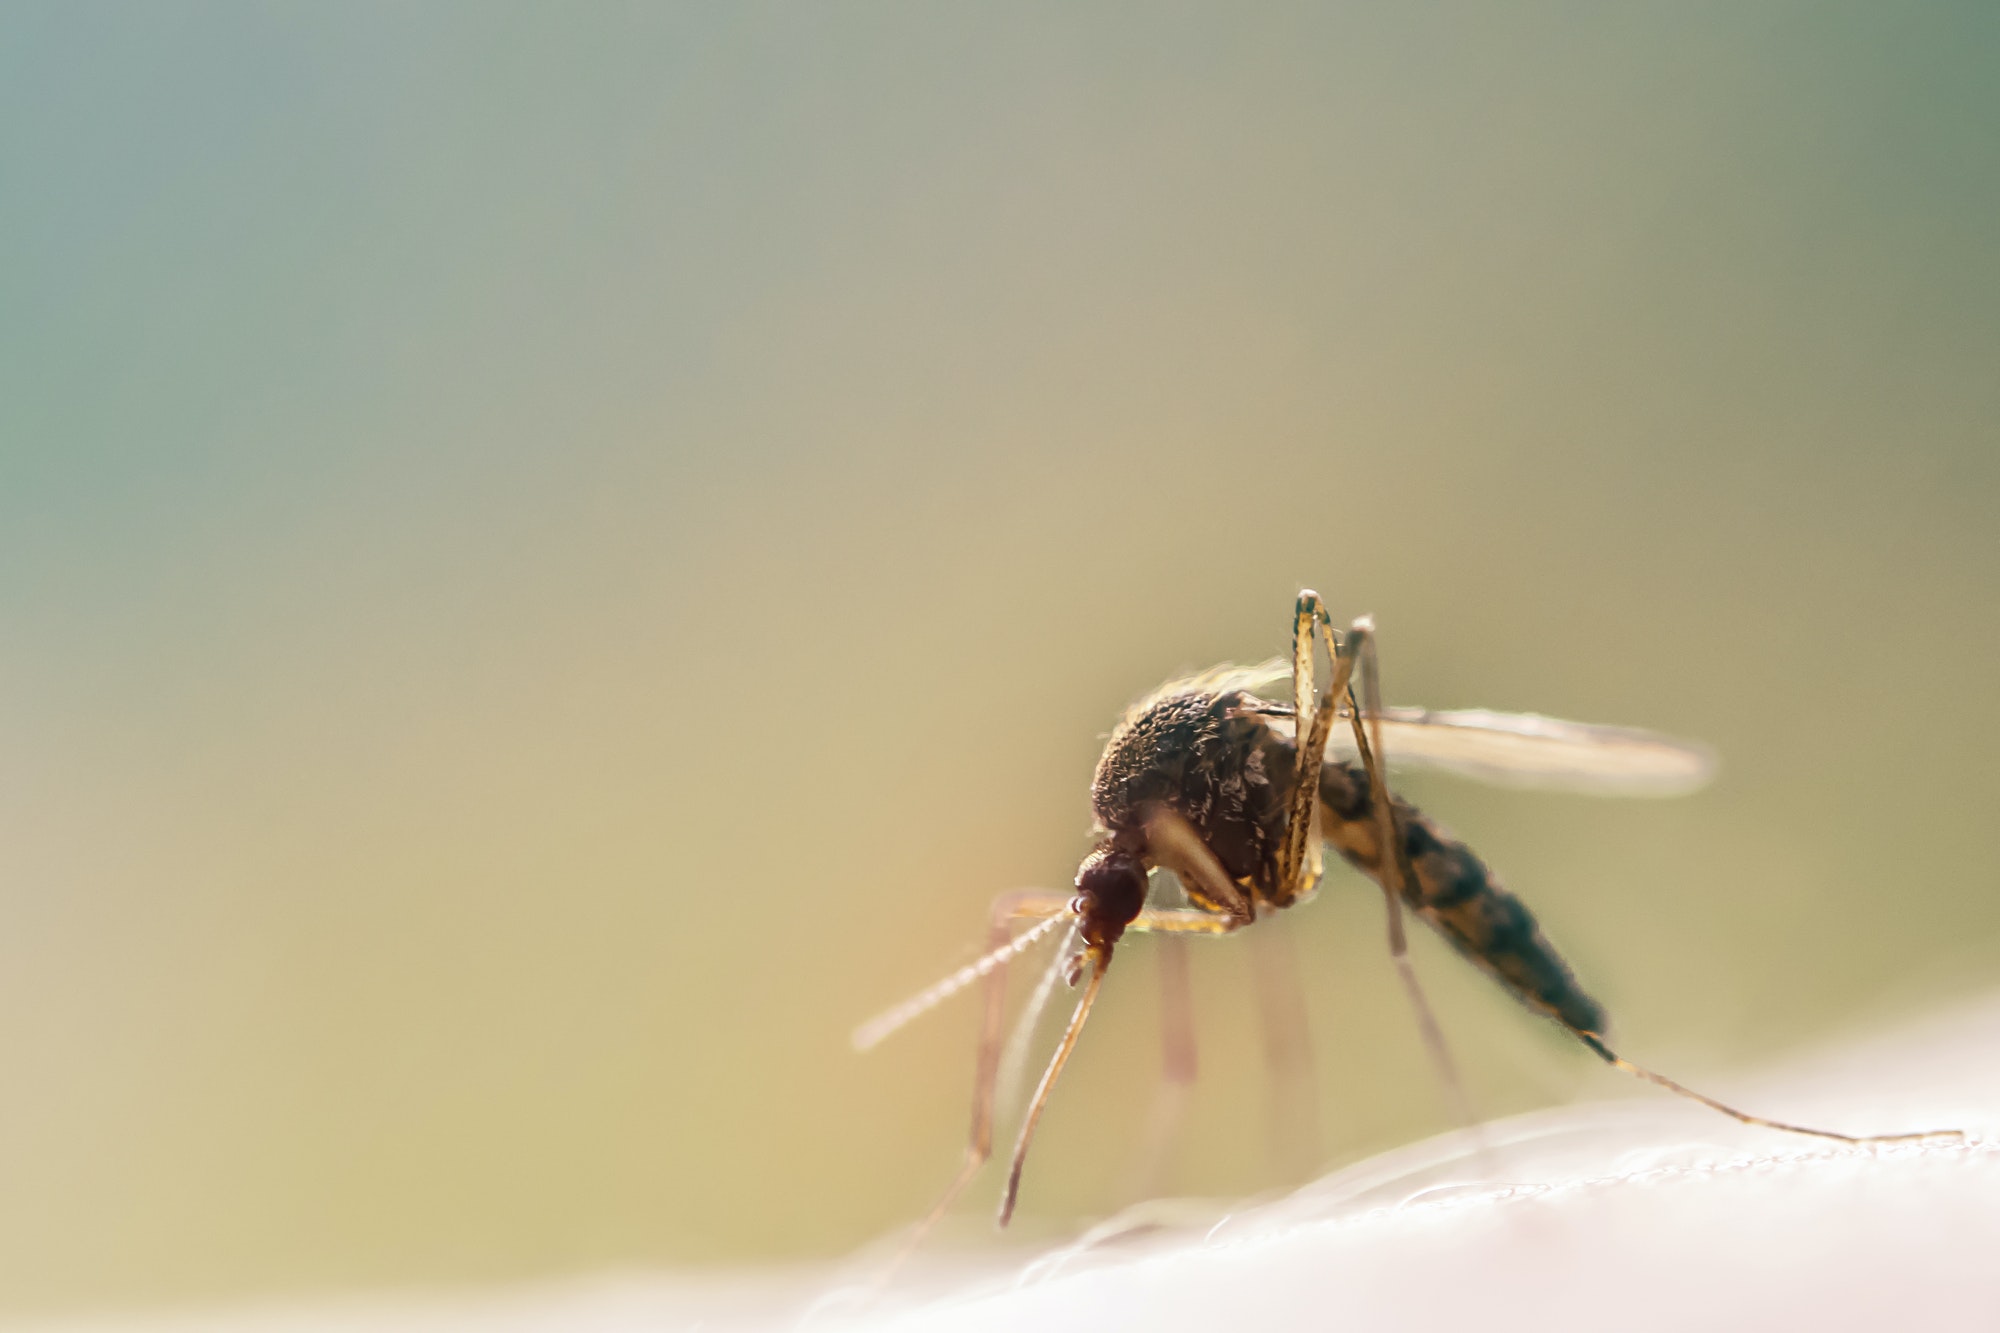 Macro shot of a mosquito on human skin sucking blood